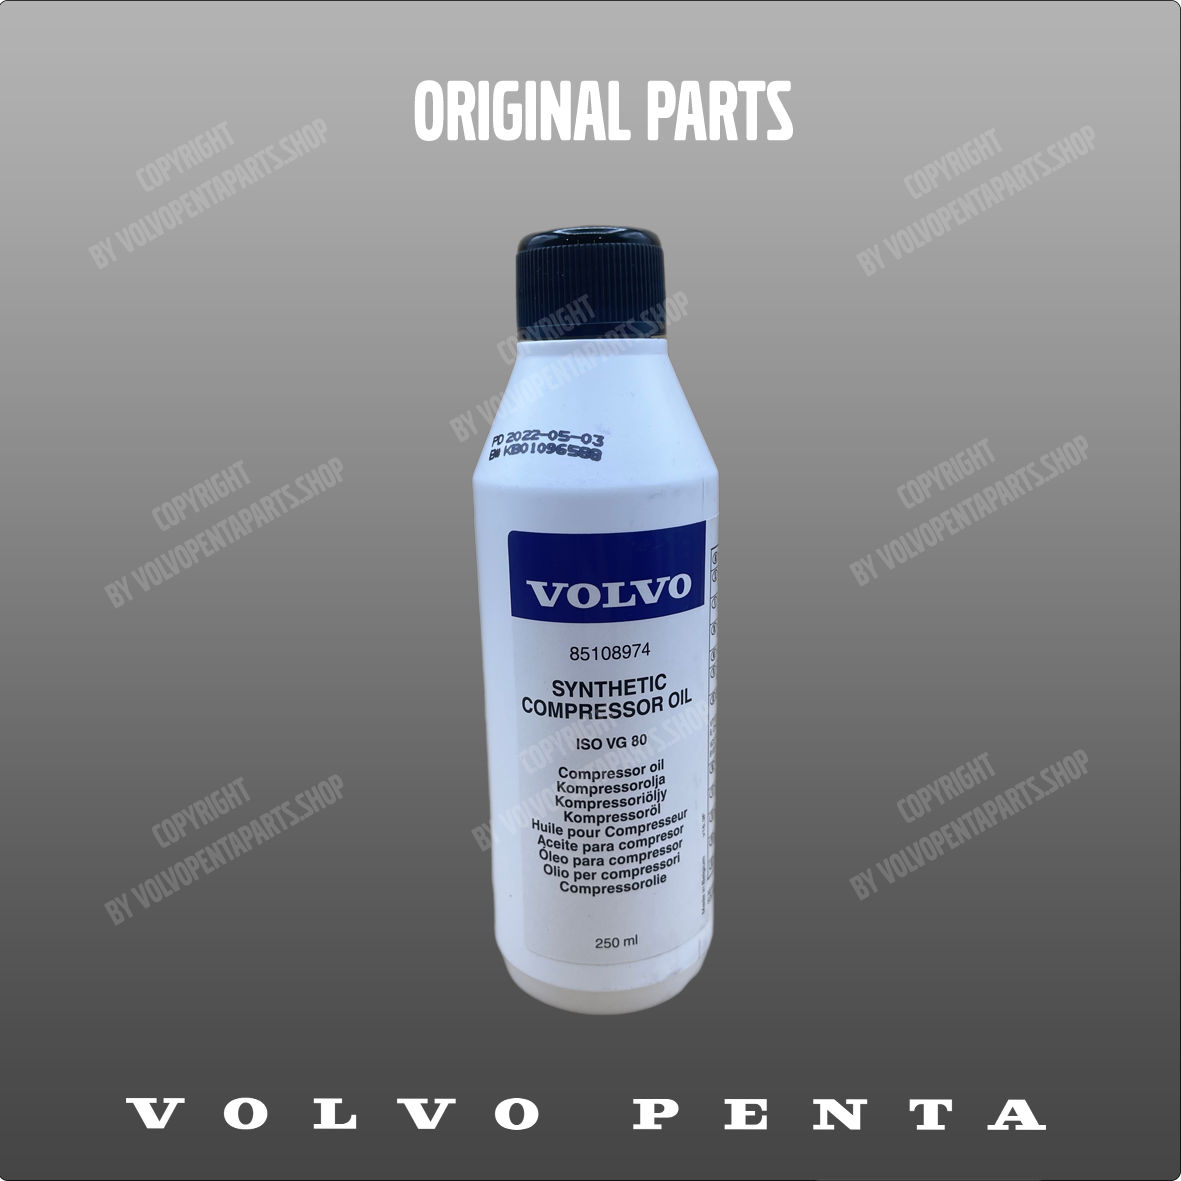 Volvo Penta lubricating oil 85108974